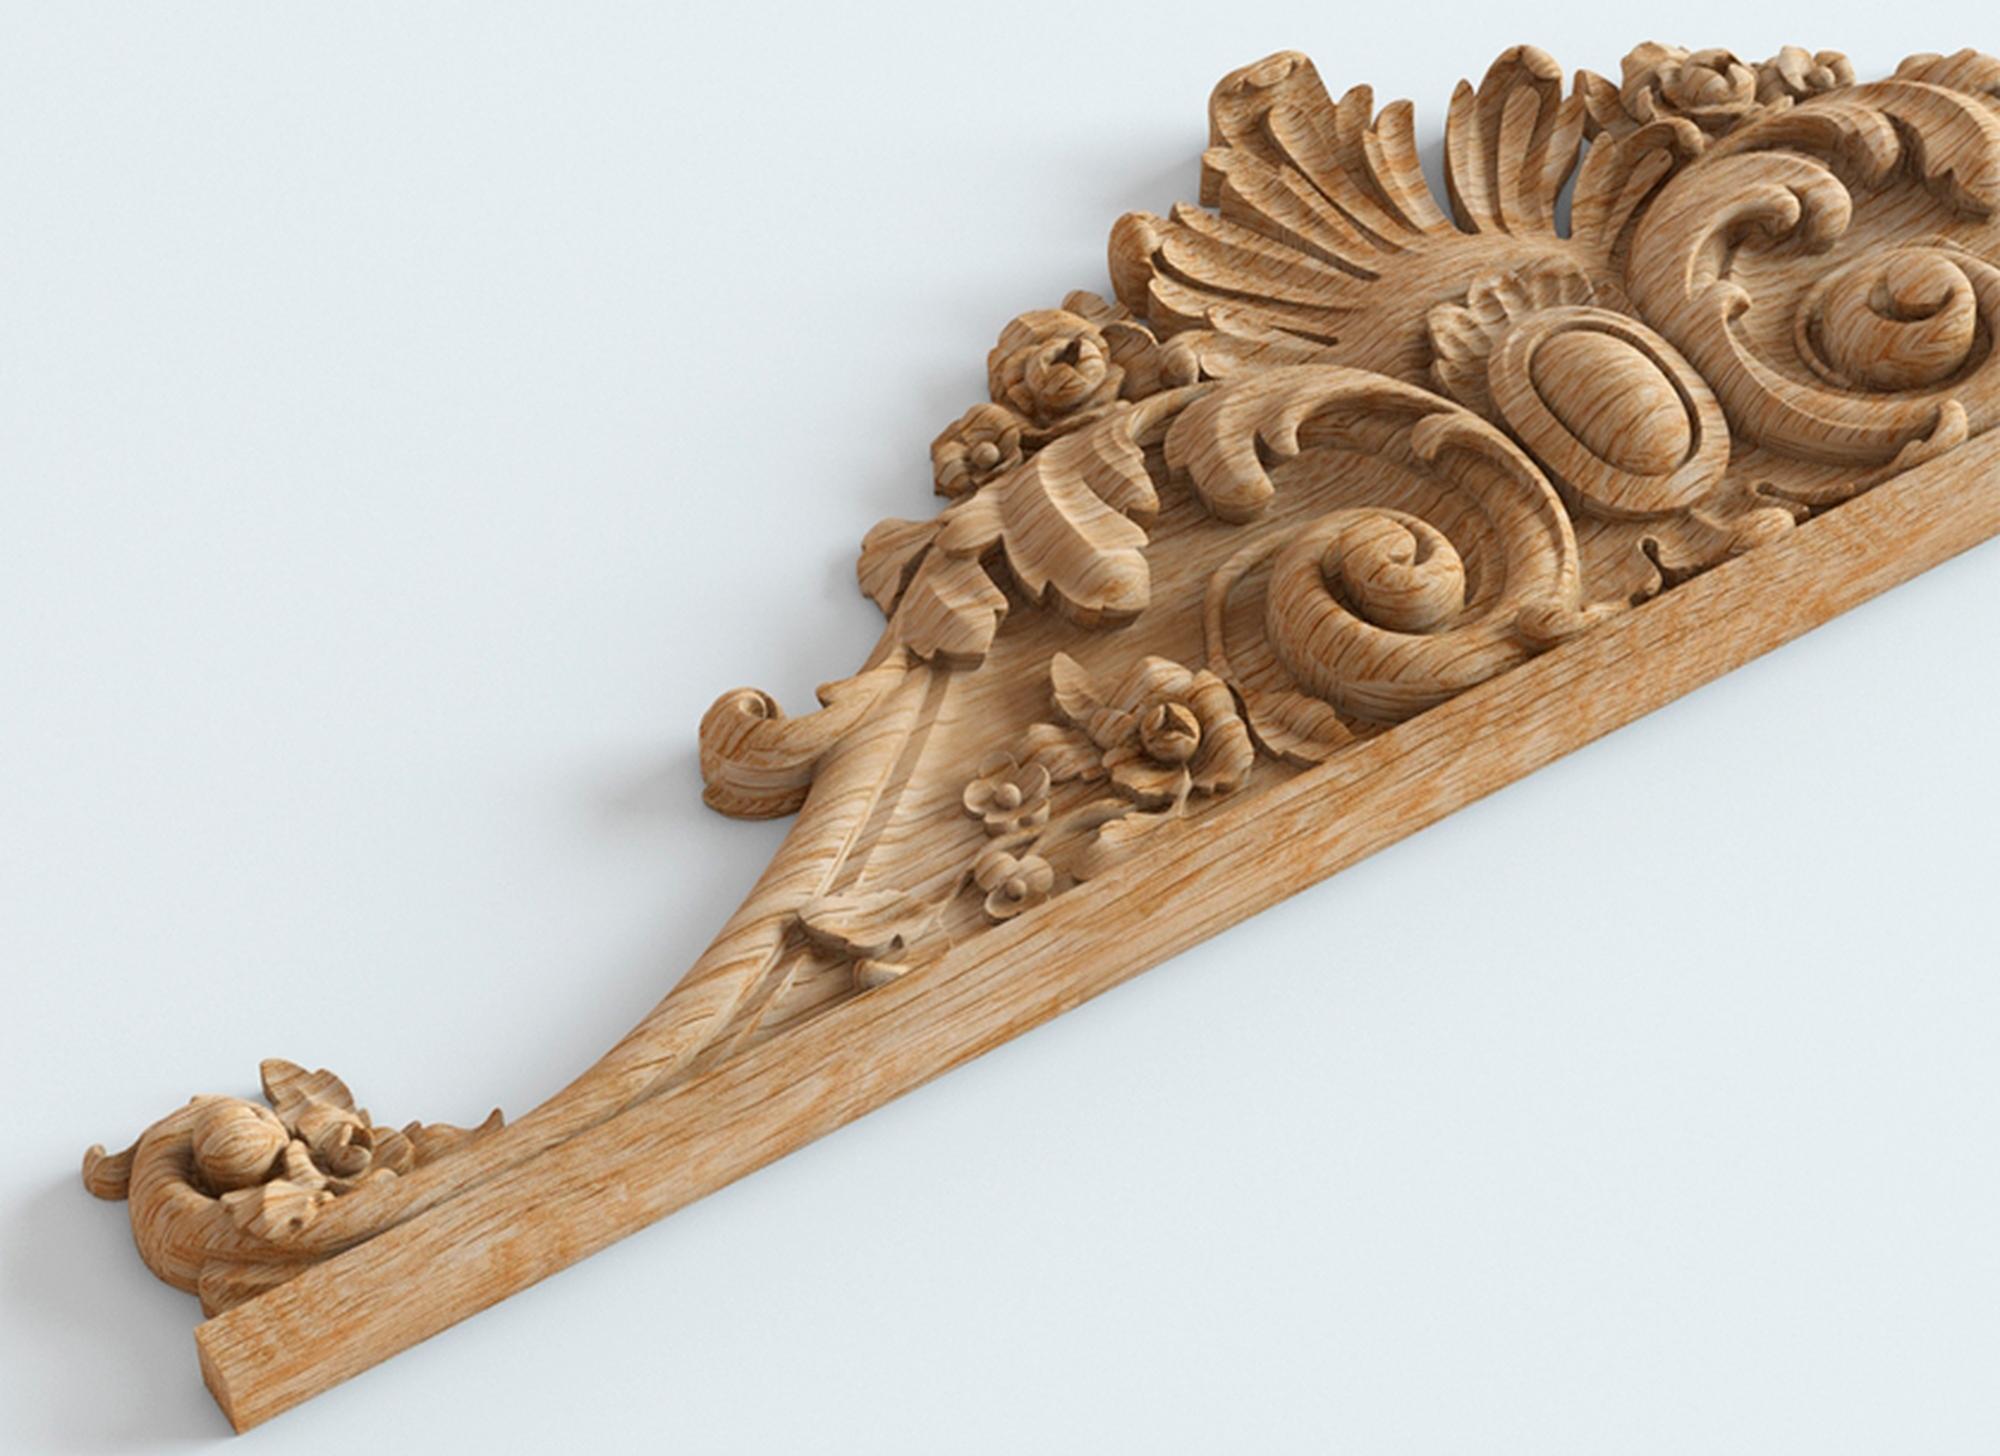 High quality decorative carved wood onlay. Unpainted.

>> SKU: N-439

>> Dimensions (A x B x C):

1) 19.69